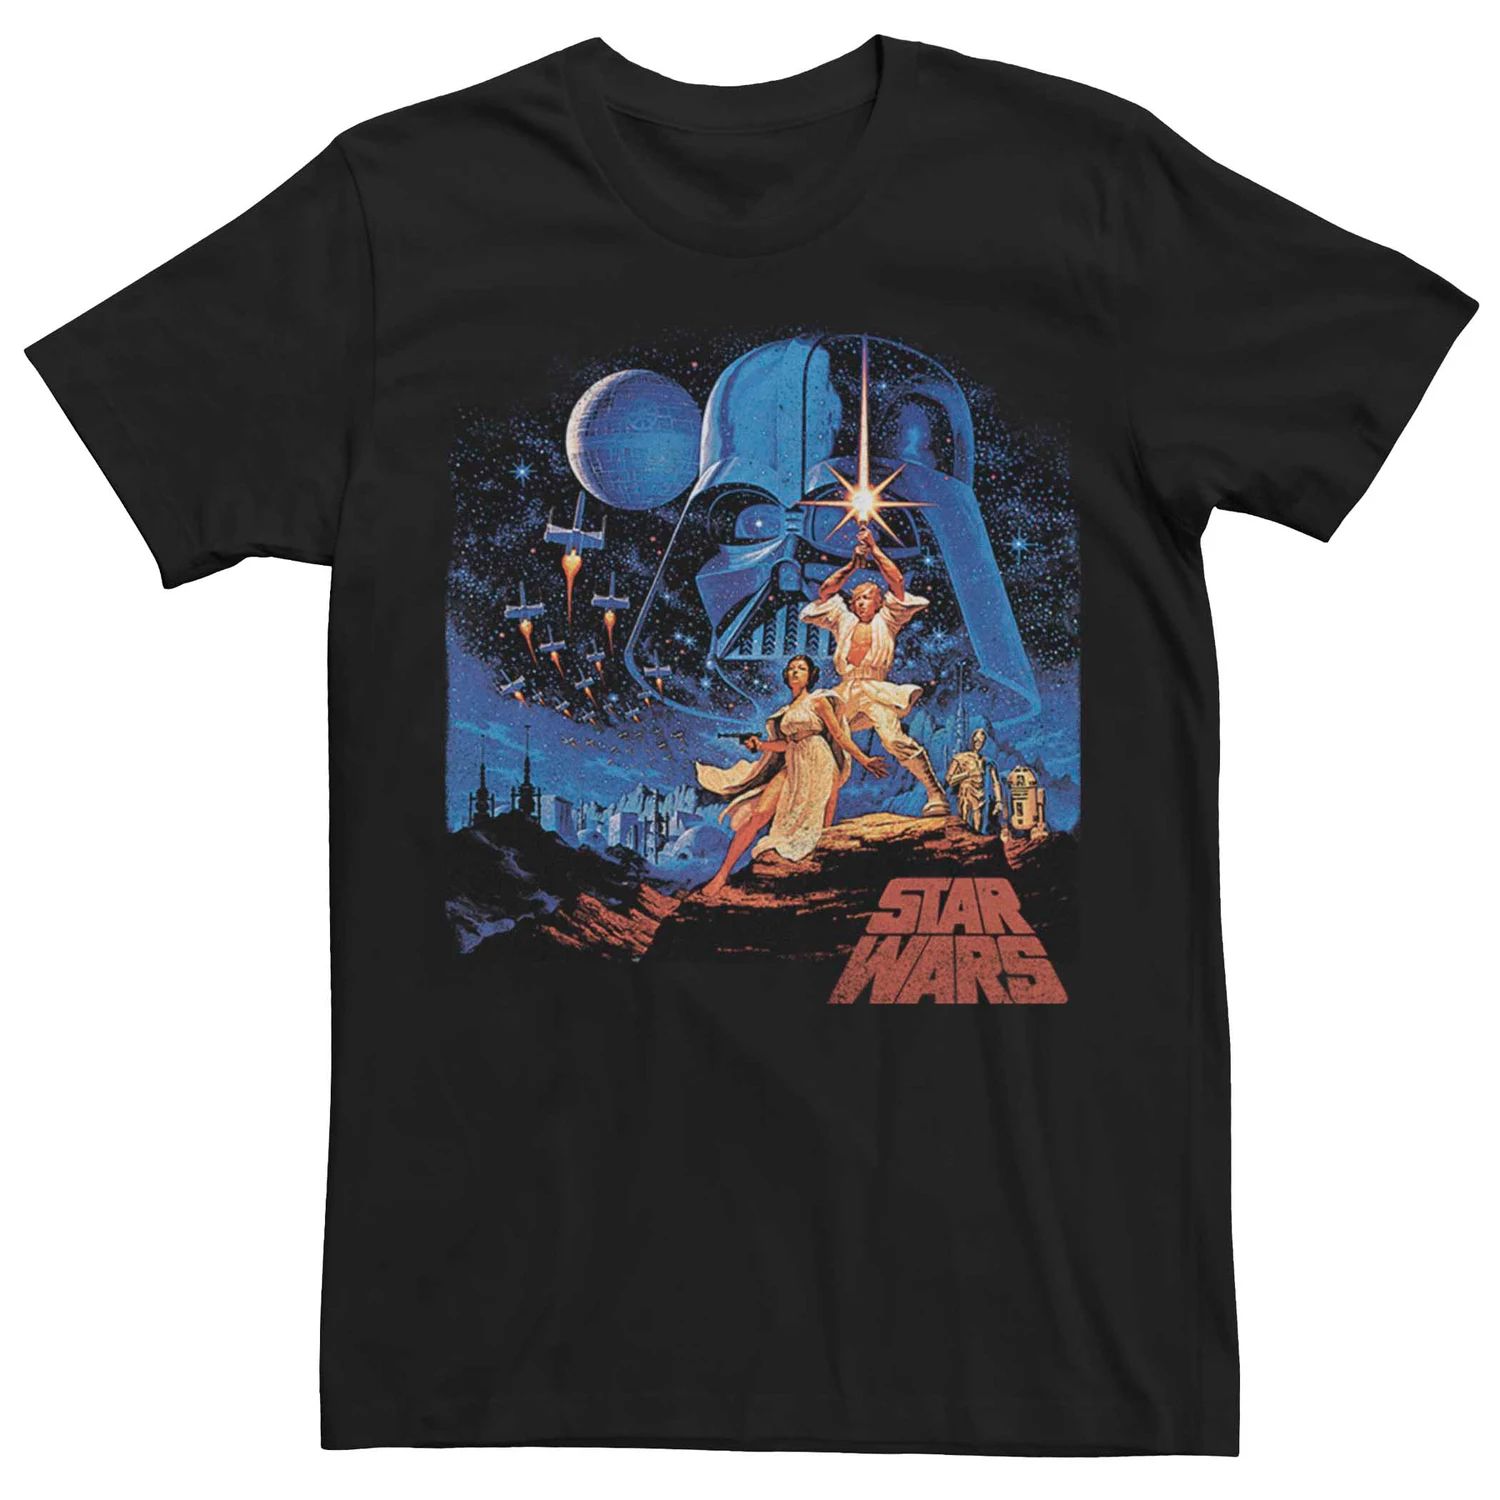 Мужская винтажная футболка с плакатом «Звездные войны» Licensed Character цена и фото